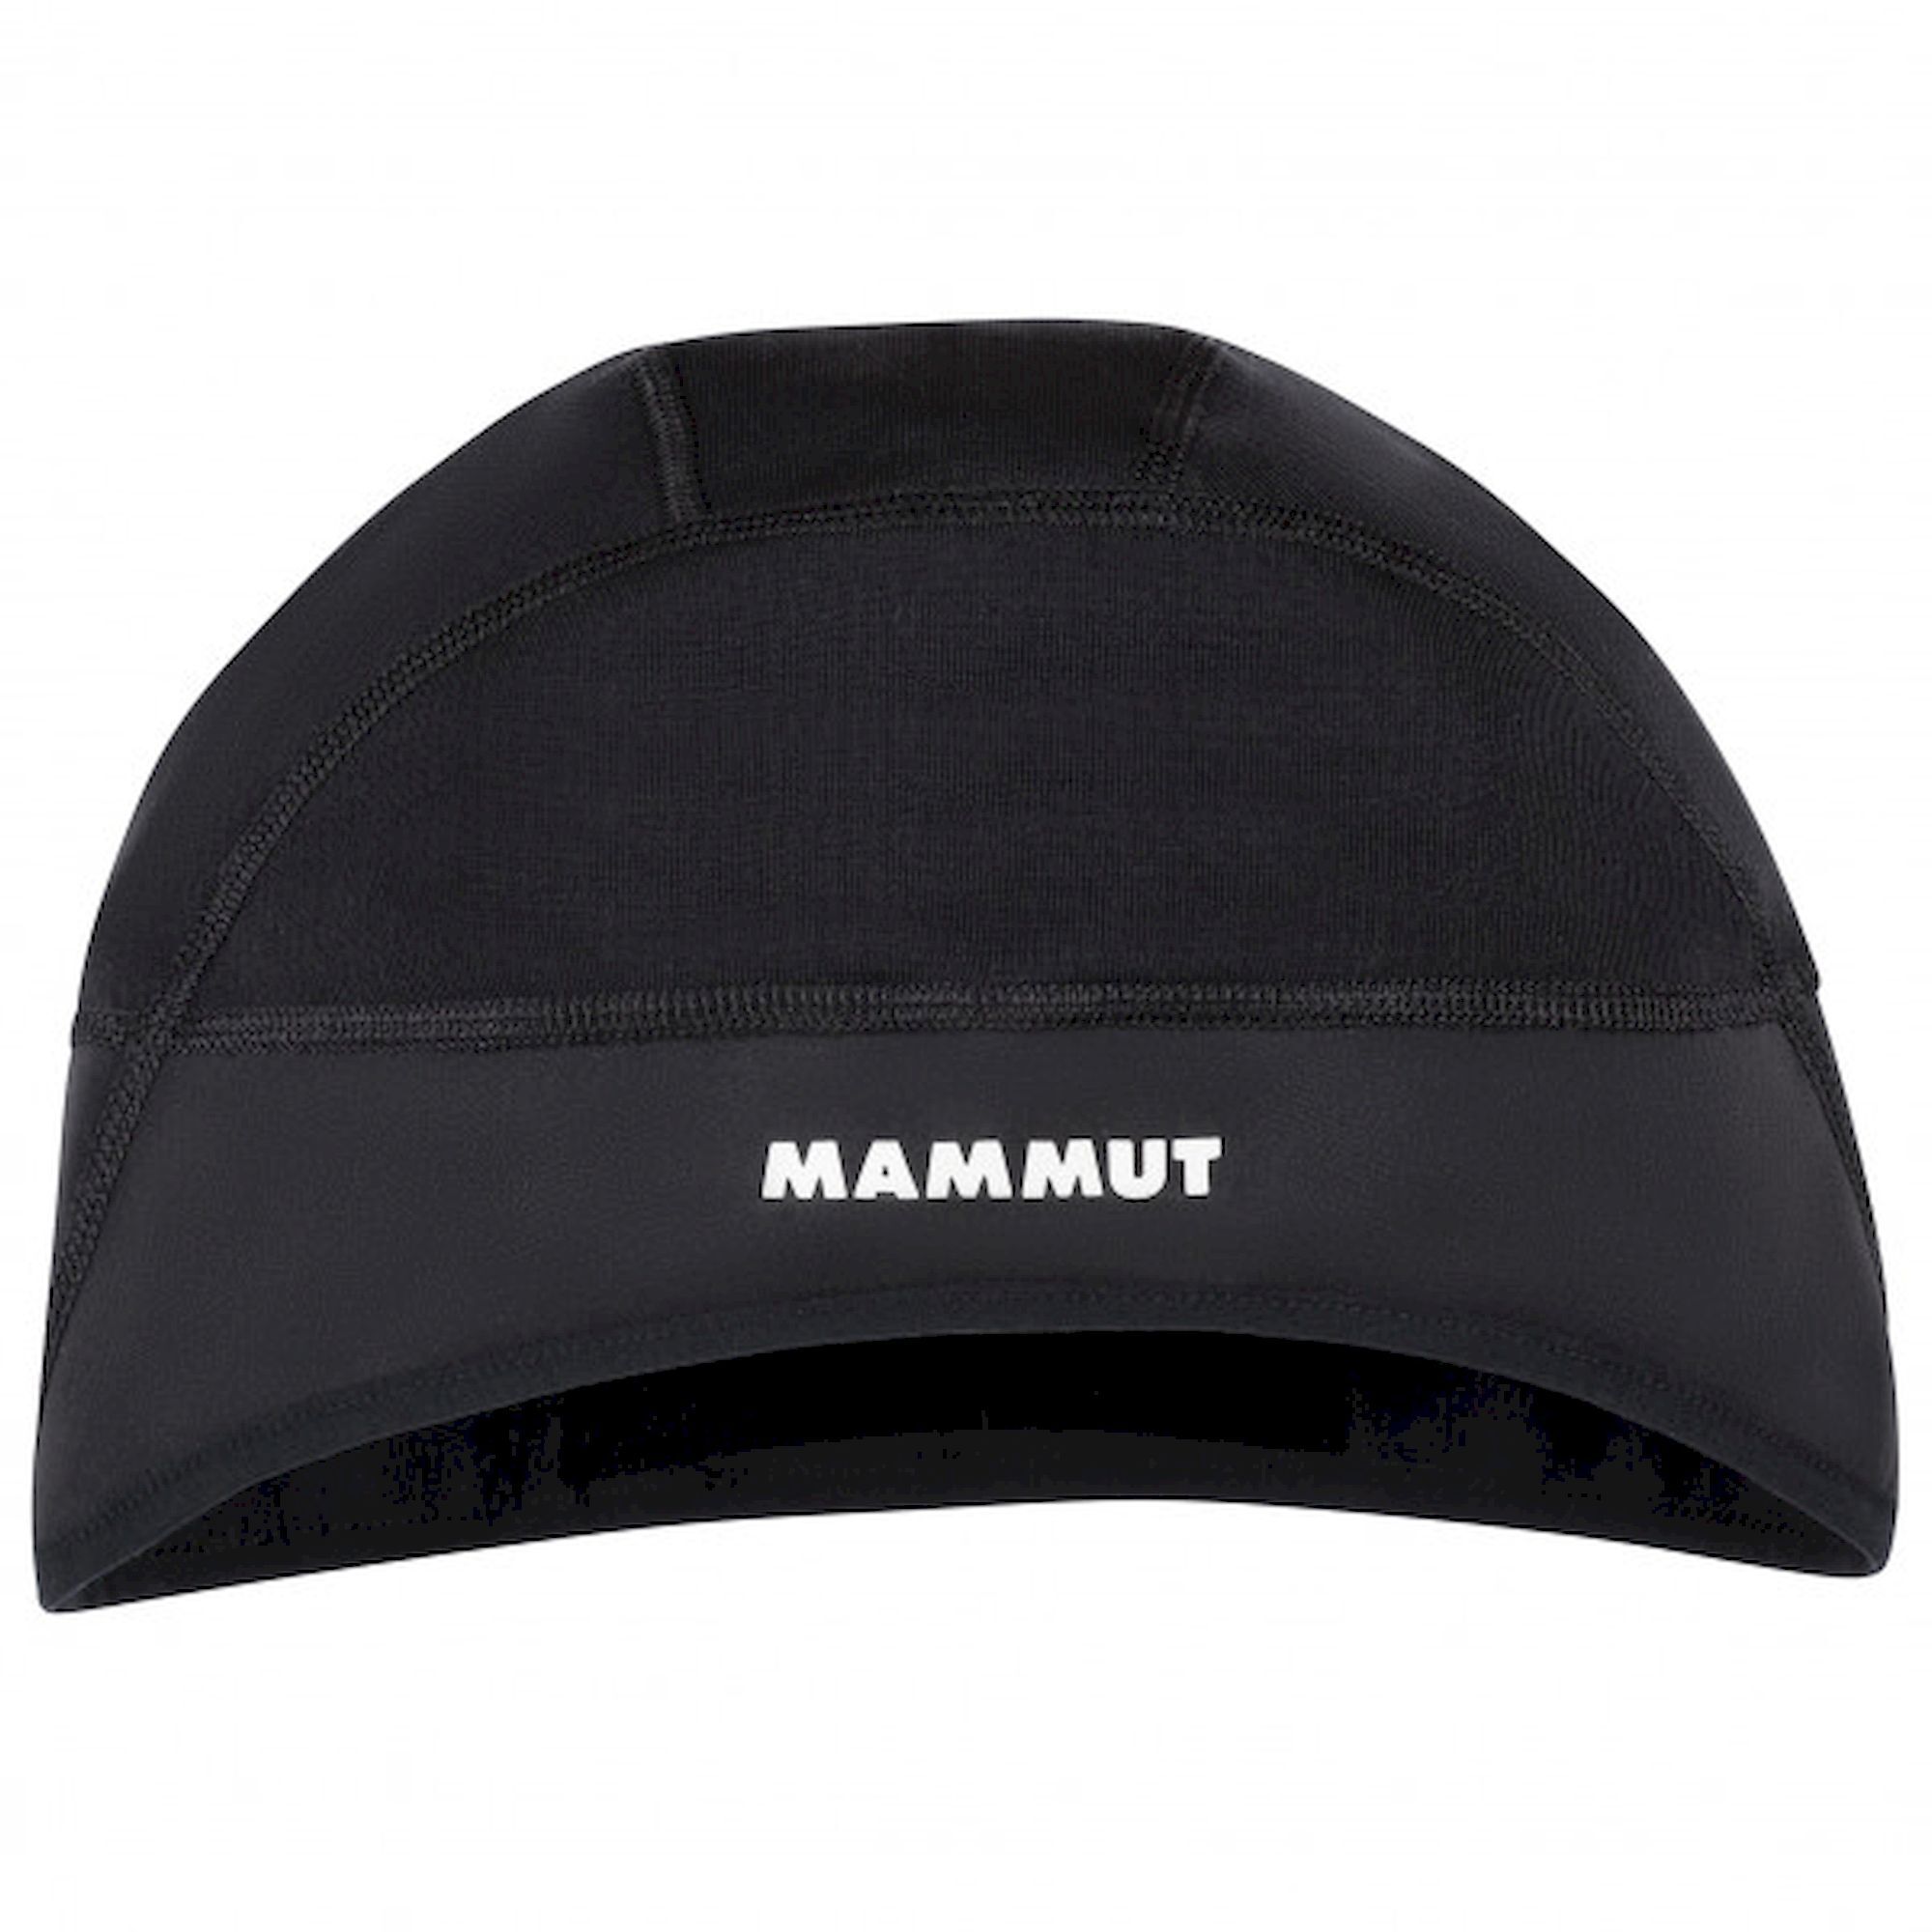 Mammut WS Helm Cap - Beanie - Men's